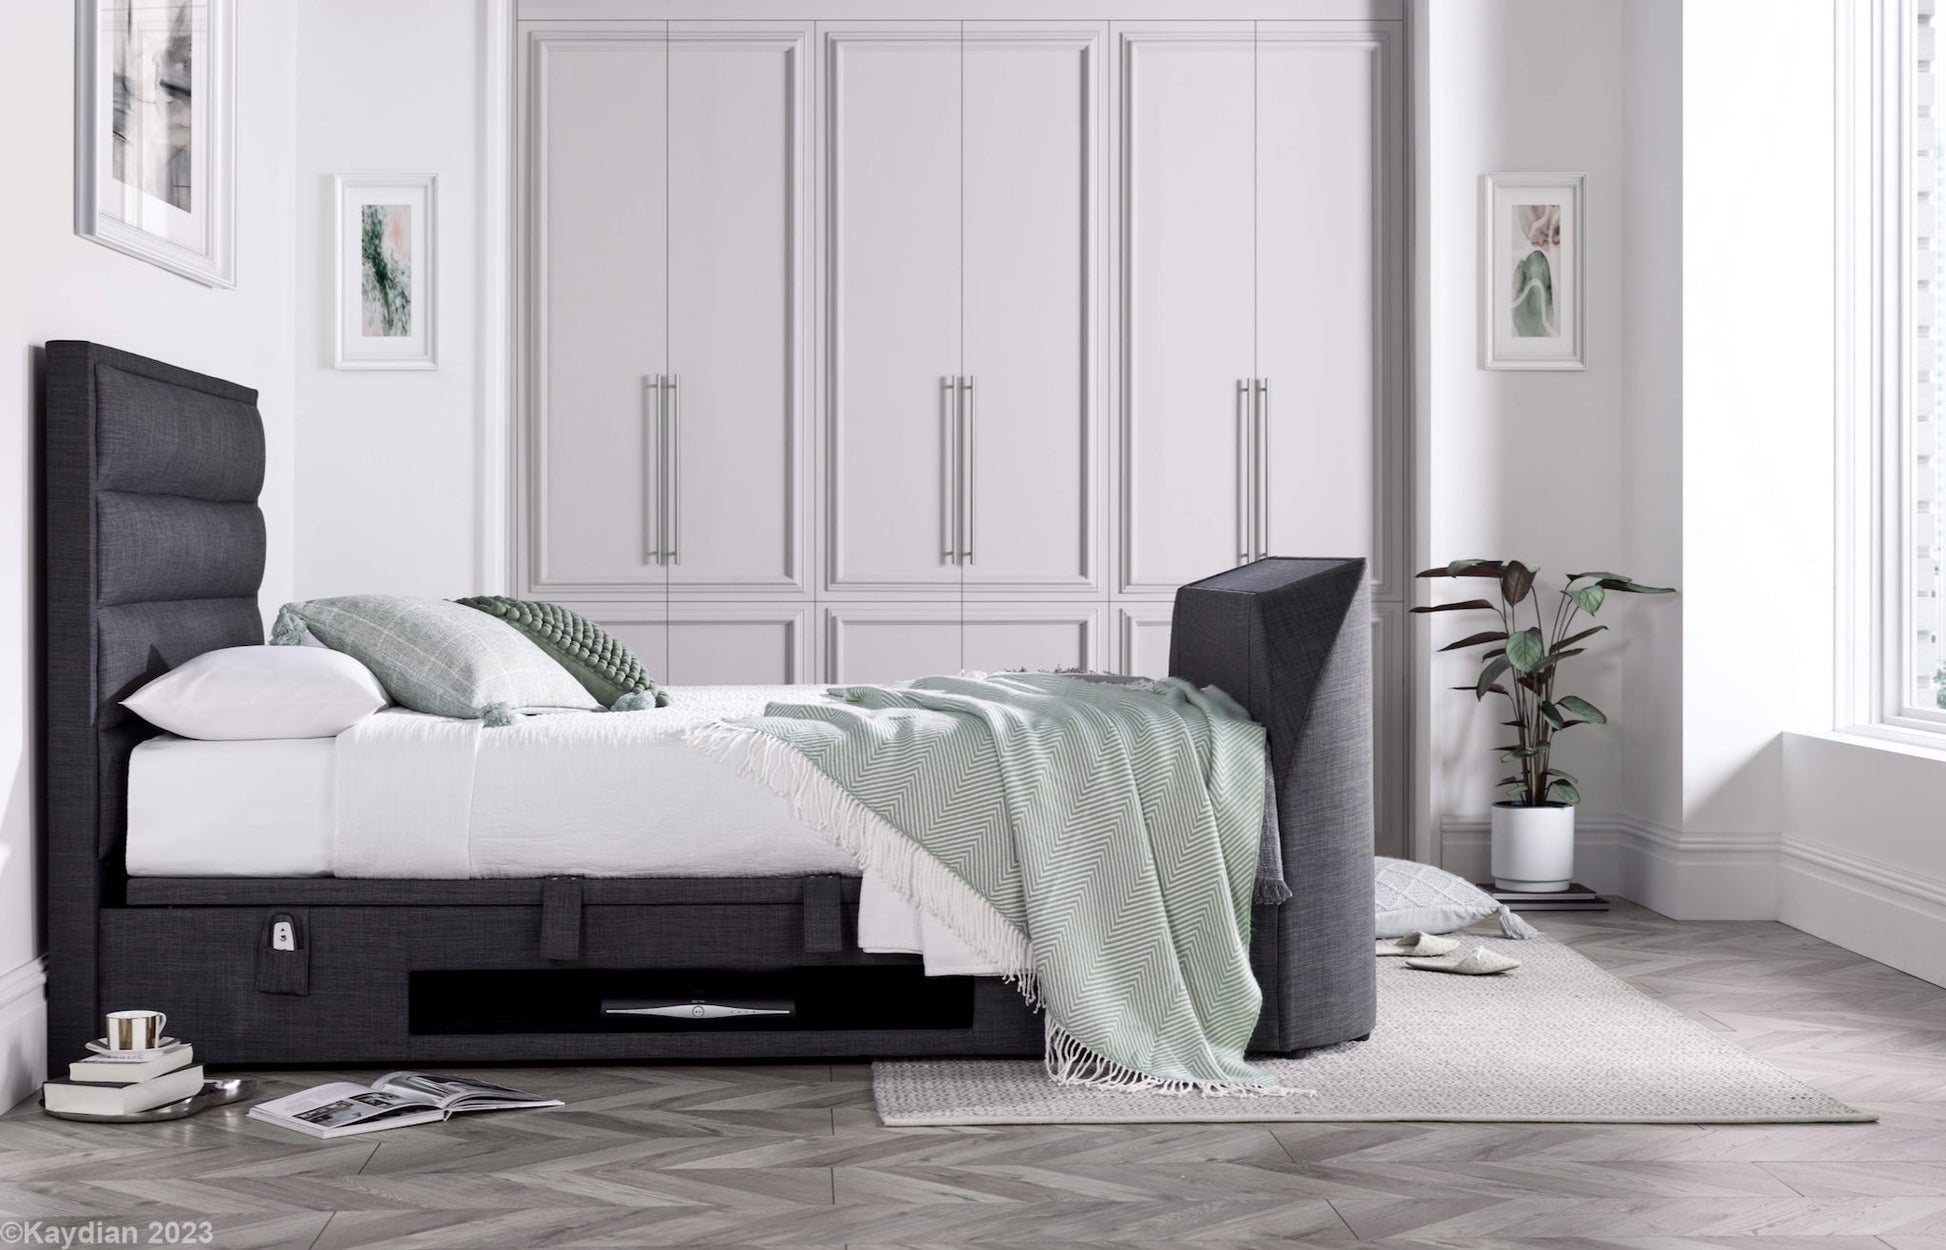 Kirkley TV Bed Frame with Ottoman Storage - Marbella Grey - TV Beds Northwest